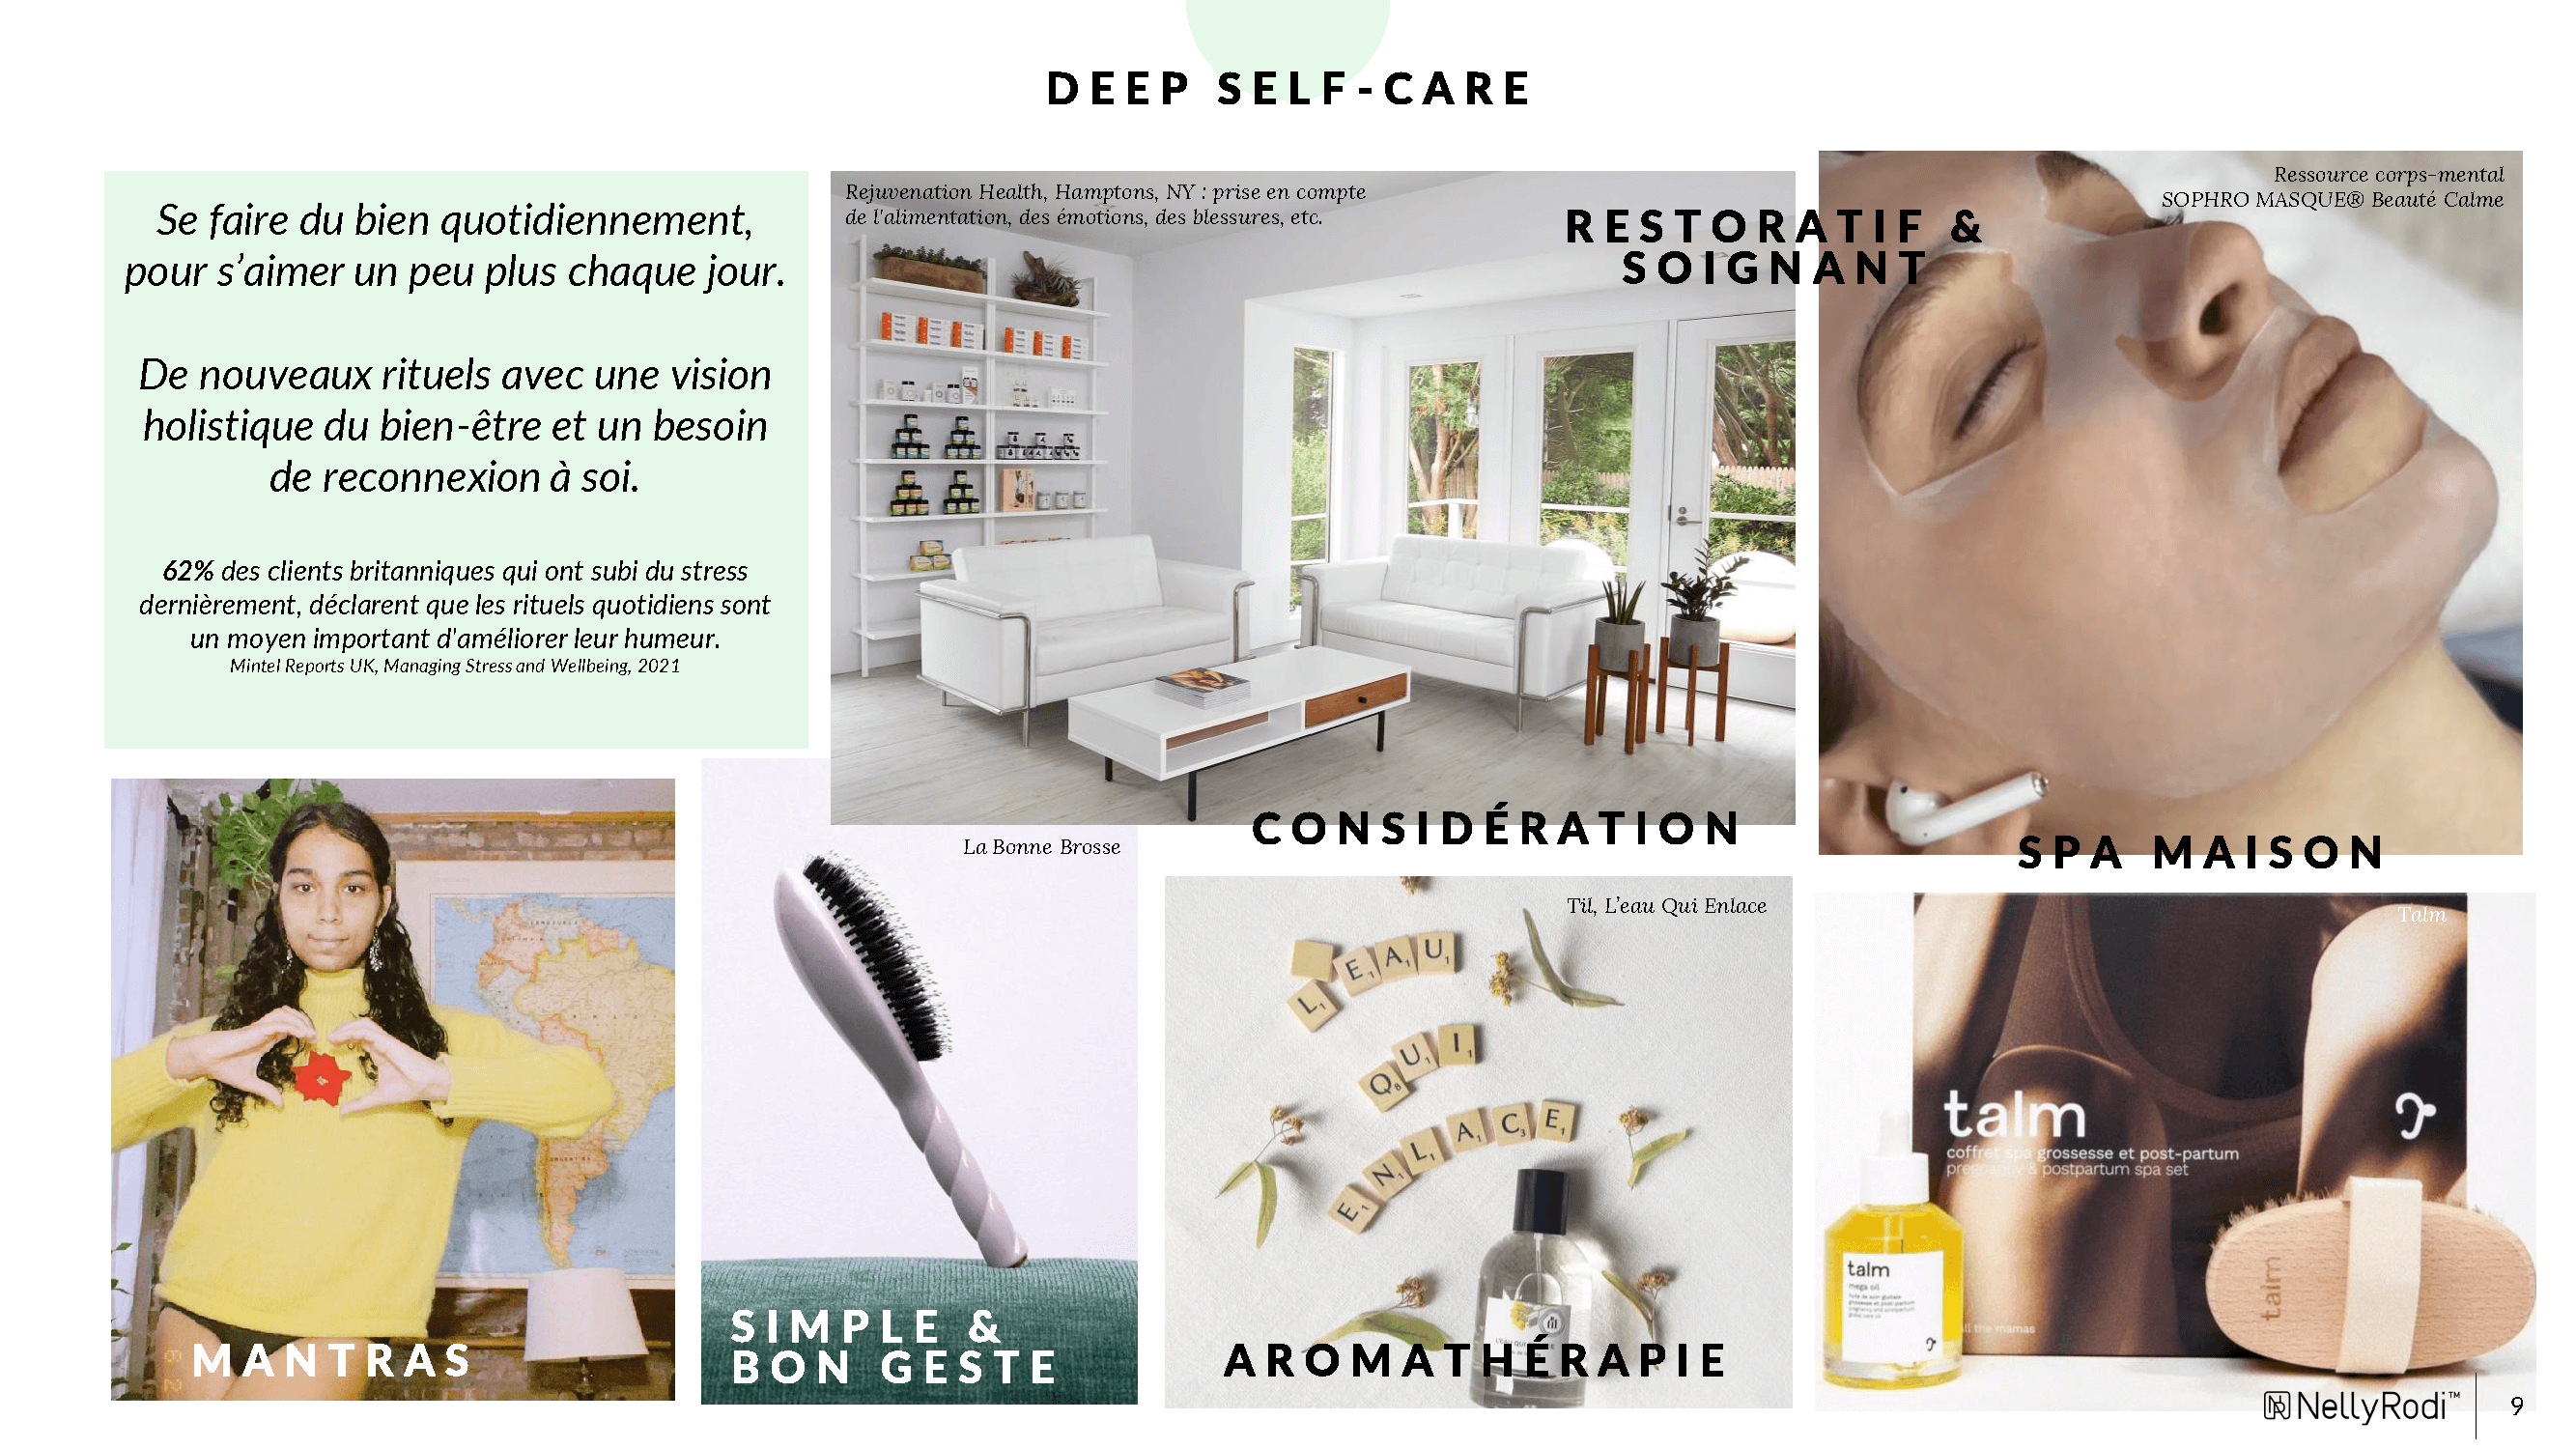 Deep self-care